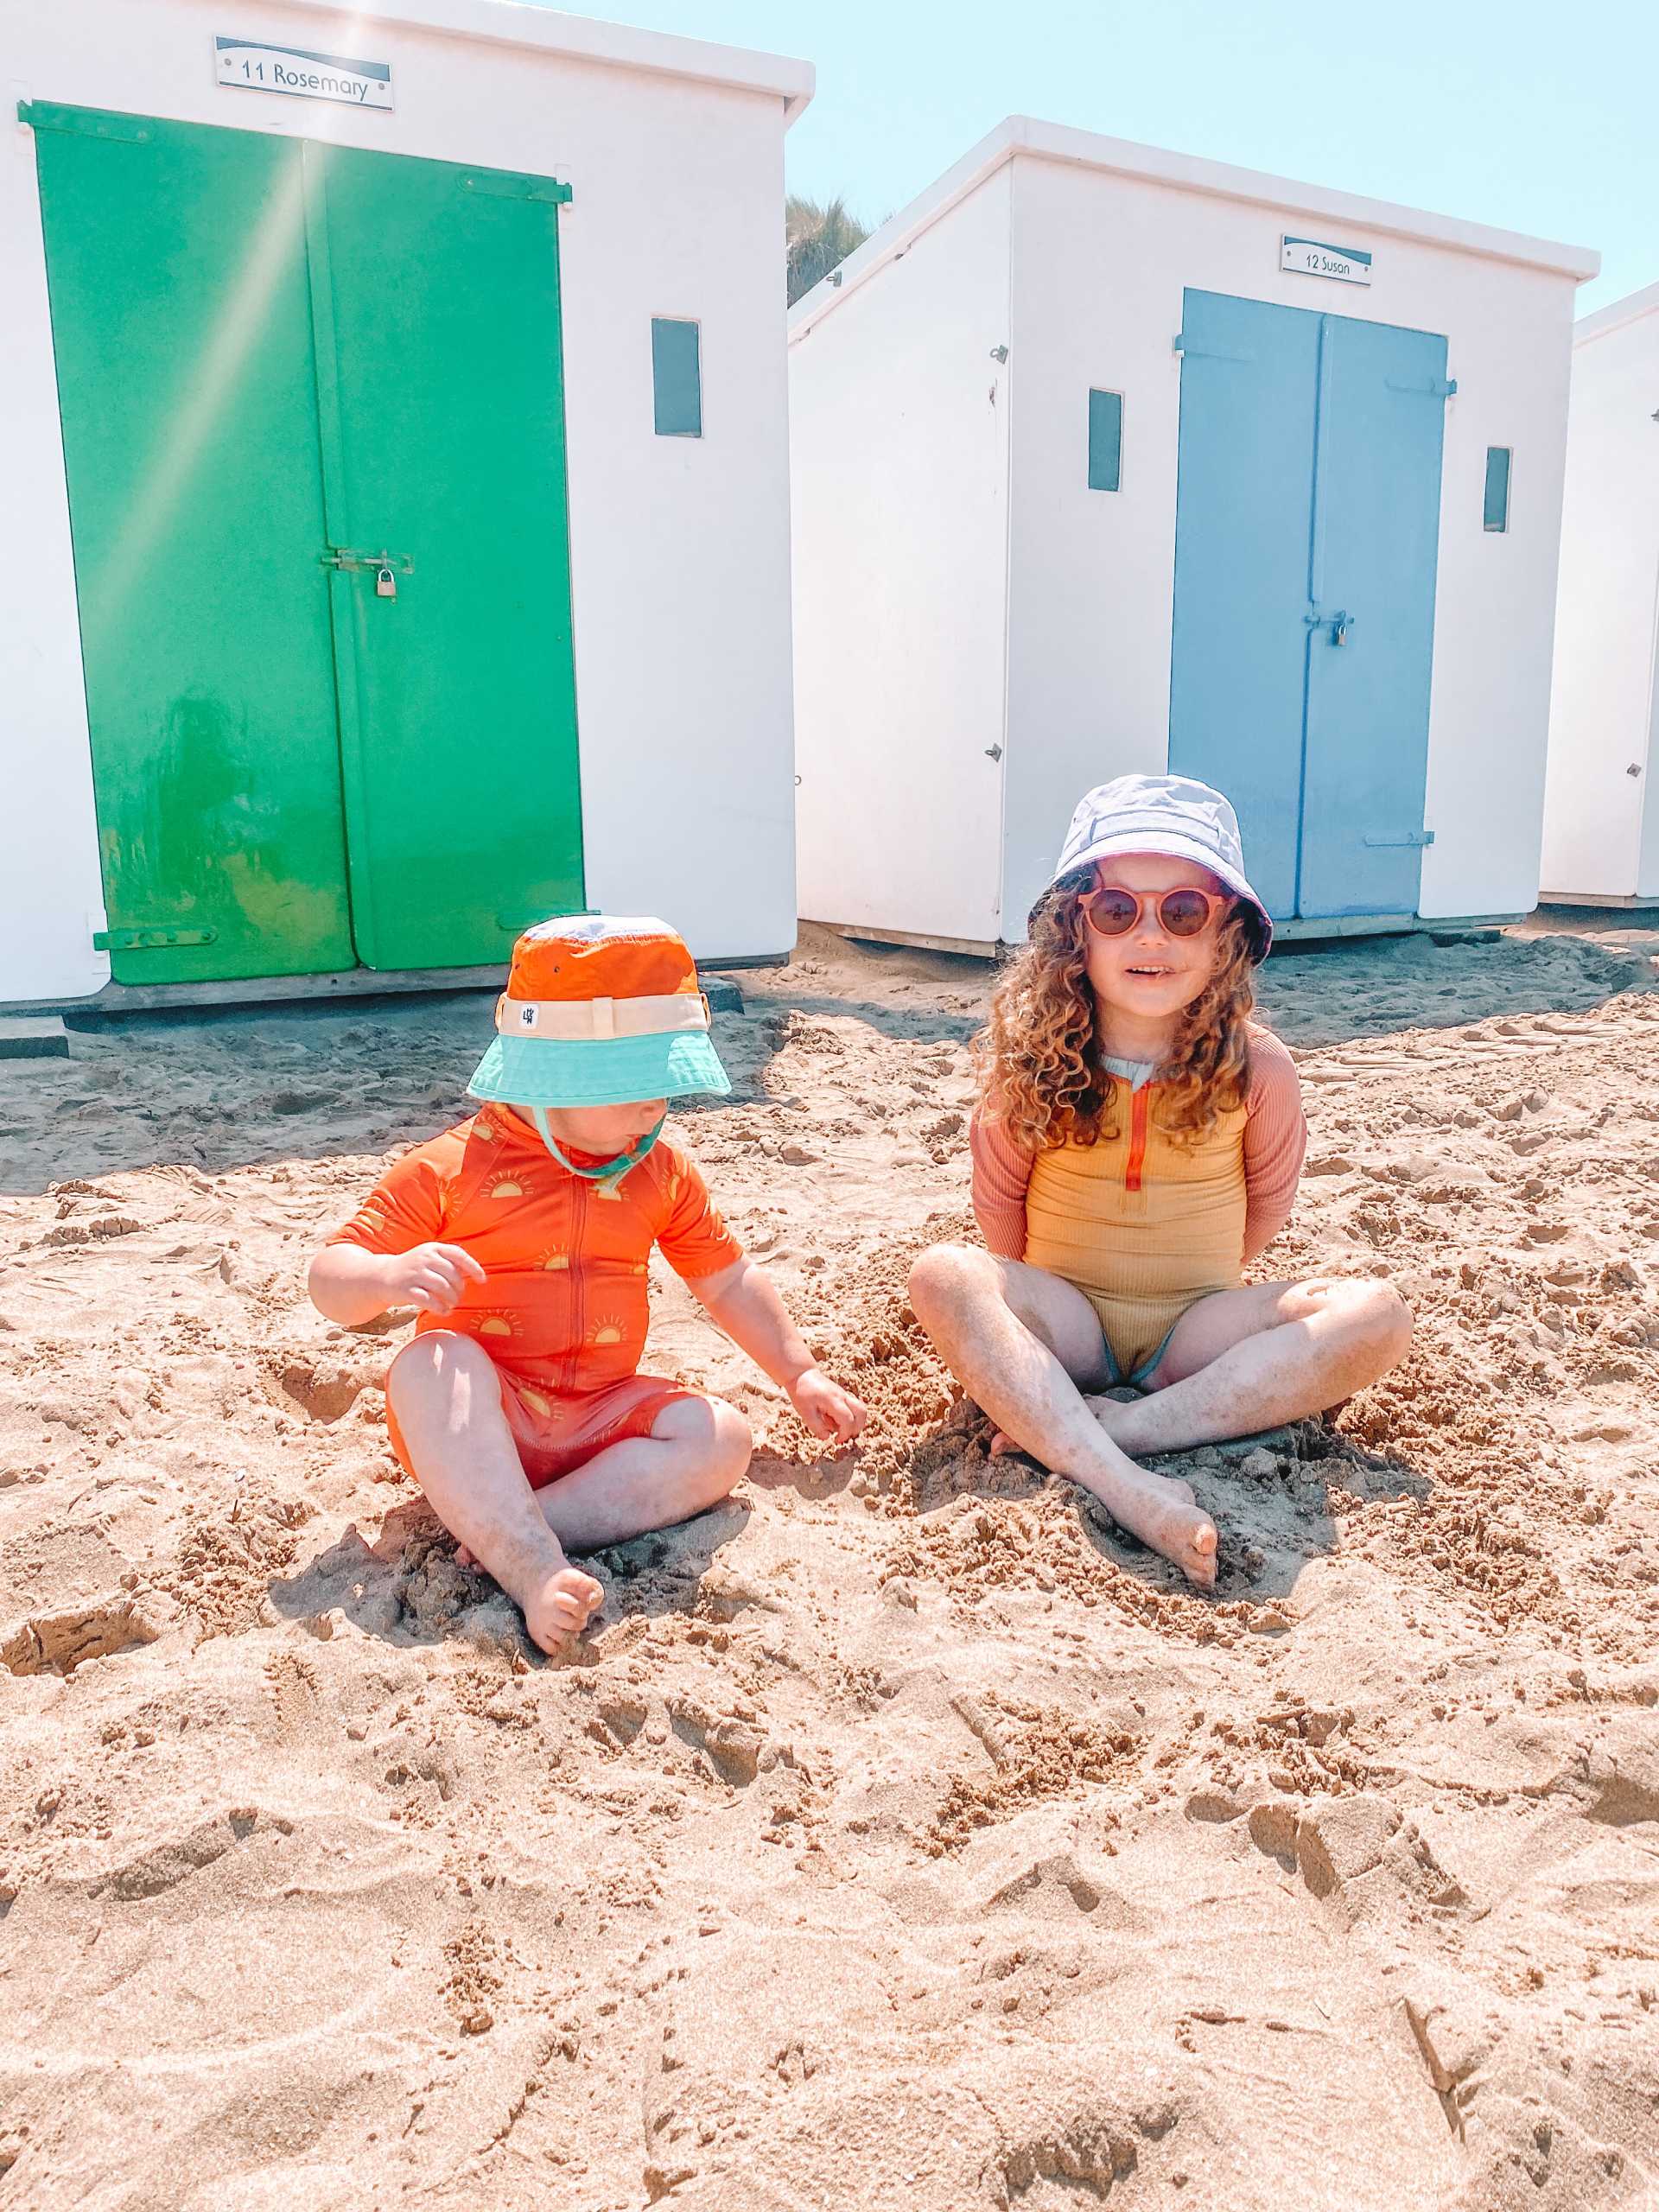 Two kids having fun on the beach as a summer activity wearing Grass & Air.